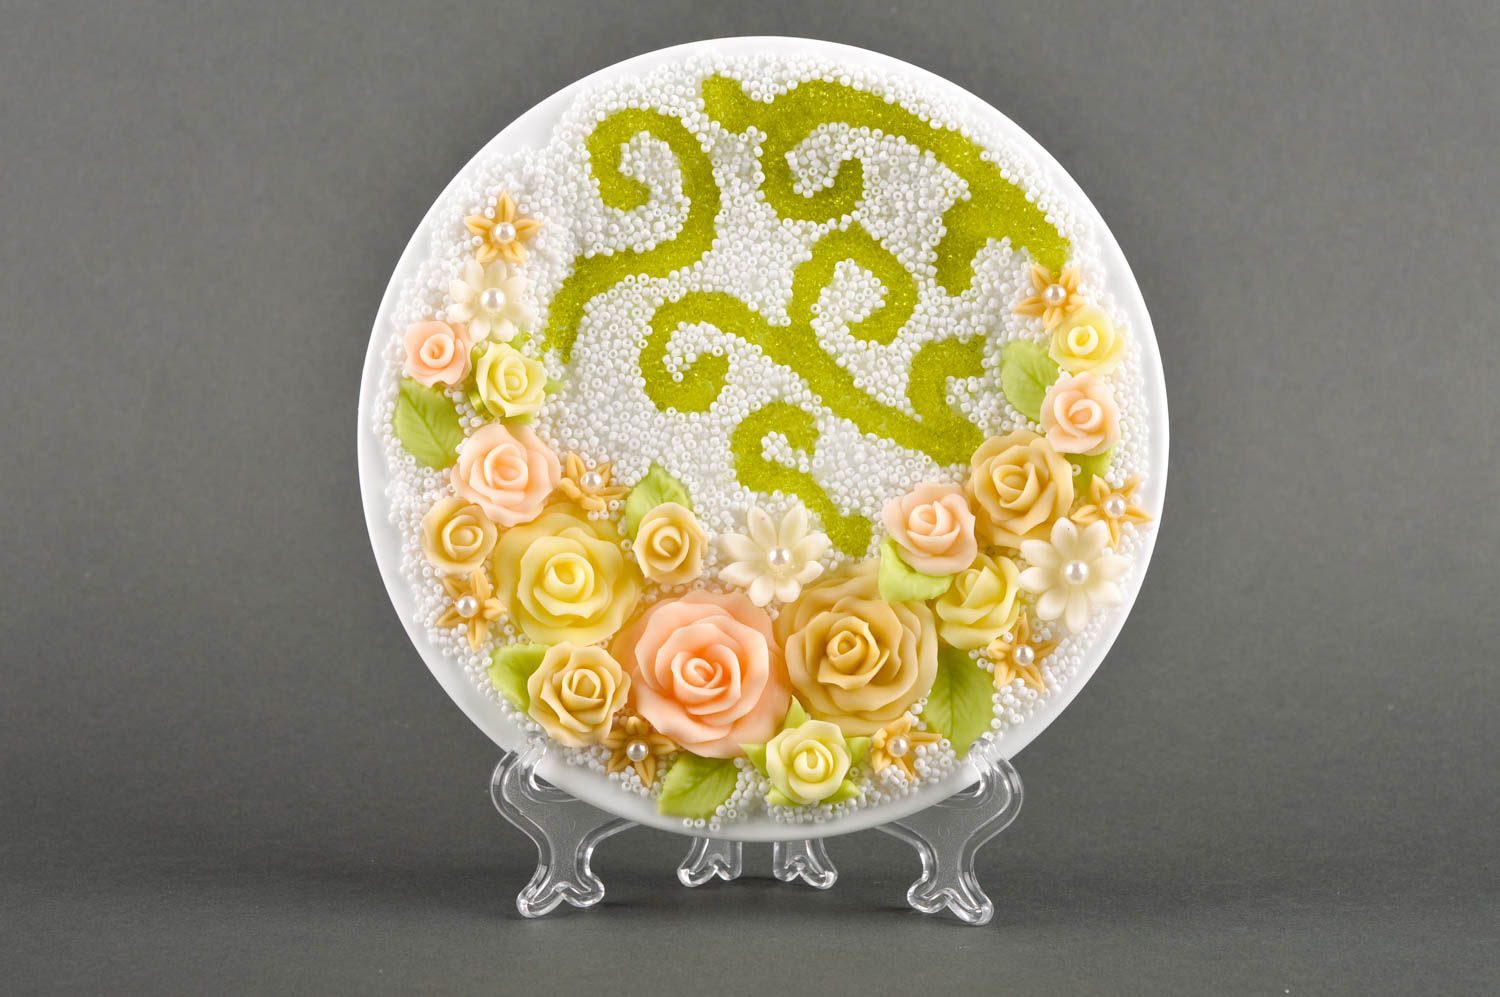 Handmade designer festive plate cute wedding ware decorative use only photo 1